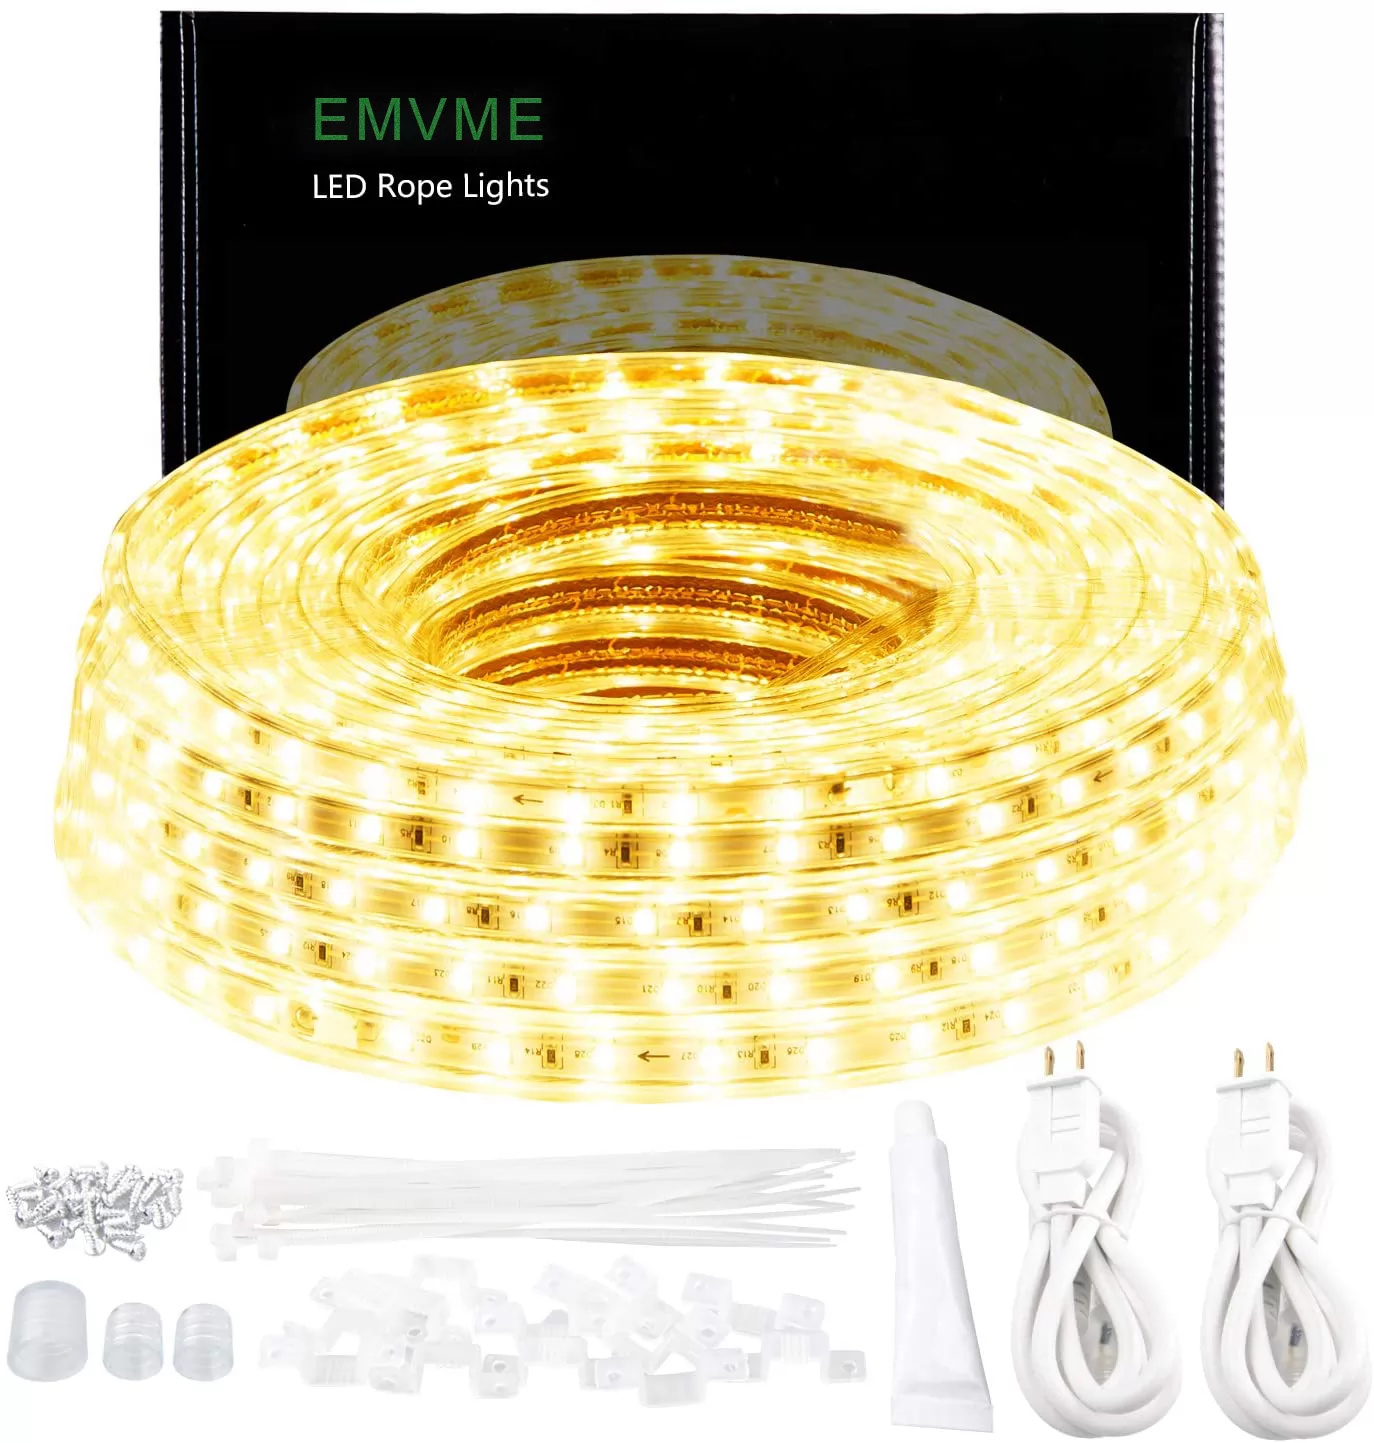 EMVME 50ft/15m LED Lights Strip kit,Waterproof, 3000K Warm White,110V 2 Wire, Flexible, 900 Units SMD 2835 LEDs, Ideal for Backyards, Decorative Light